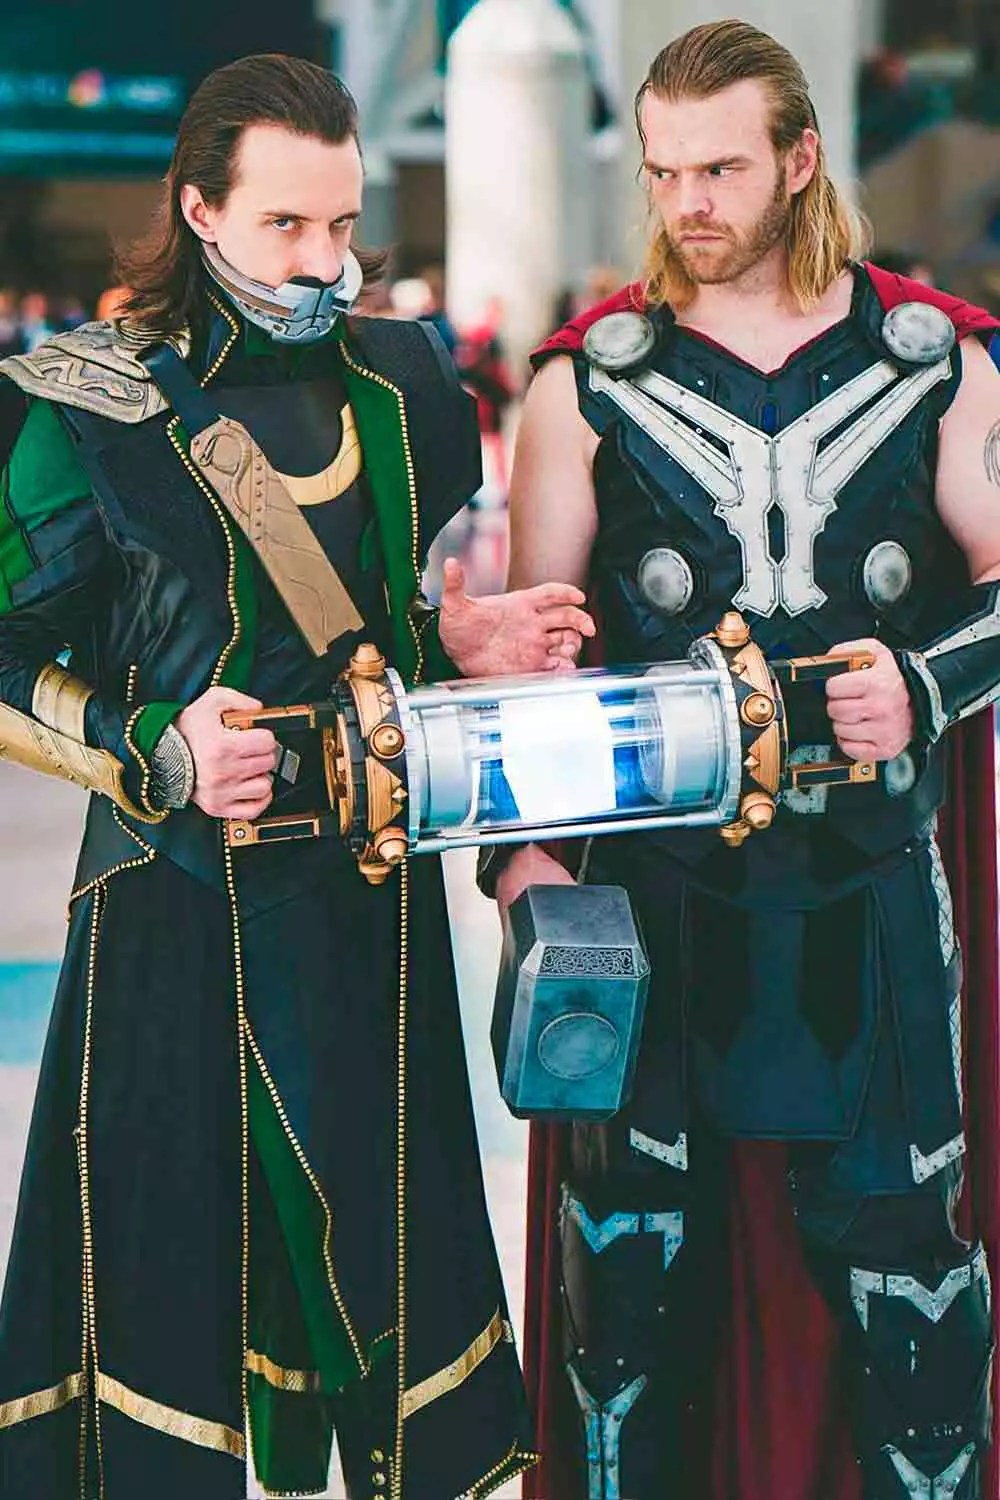 Thor And Loki #menshalloweencostumes #haloweencostumeideasmen #halloweencostumes